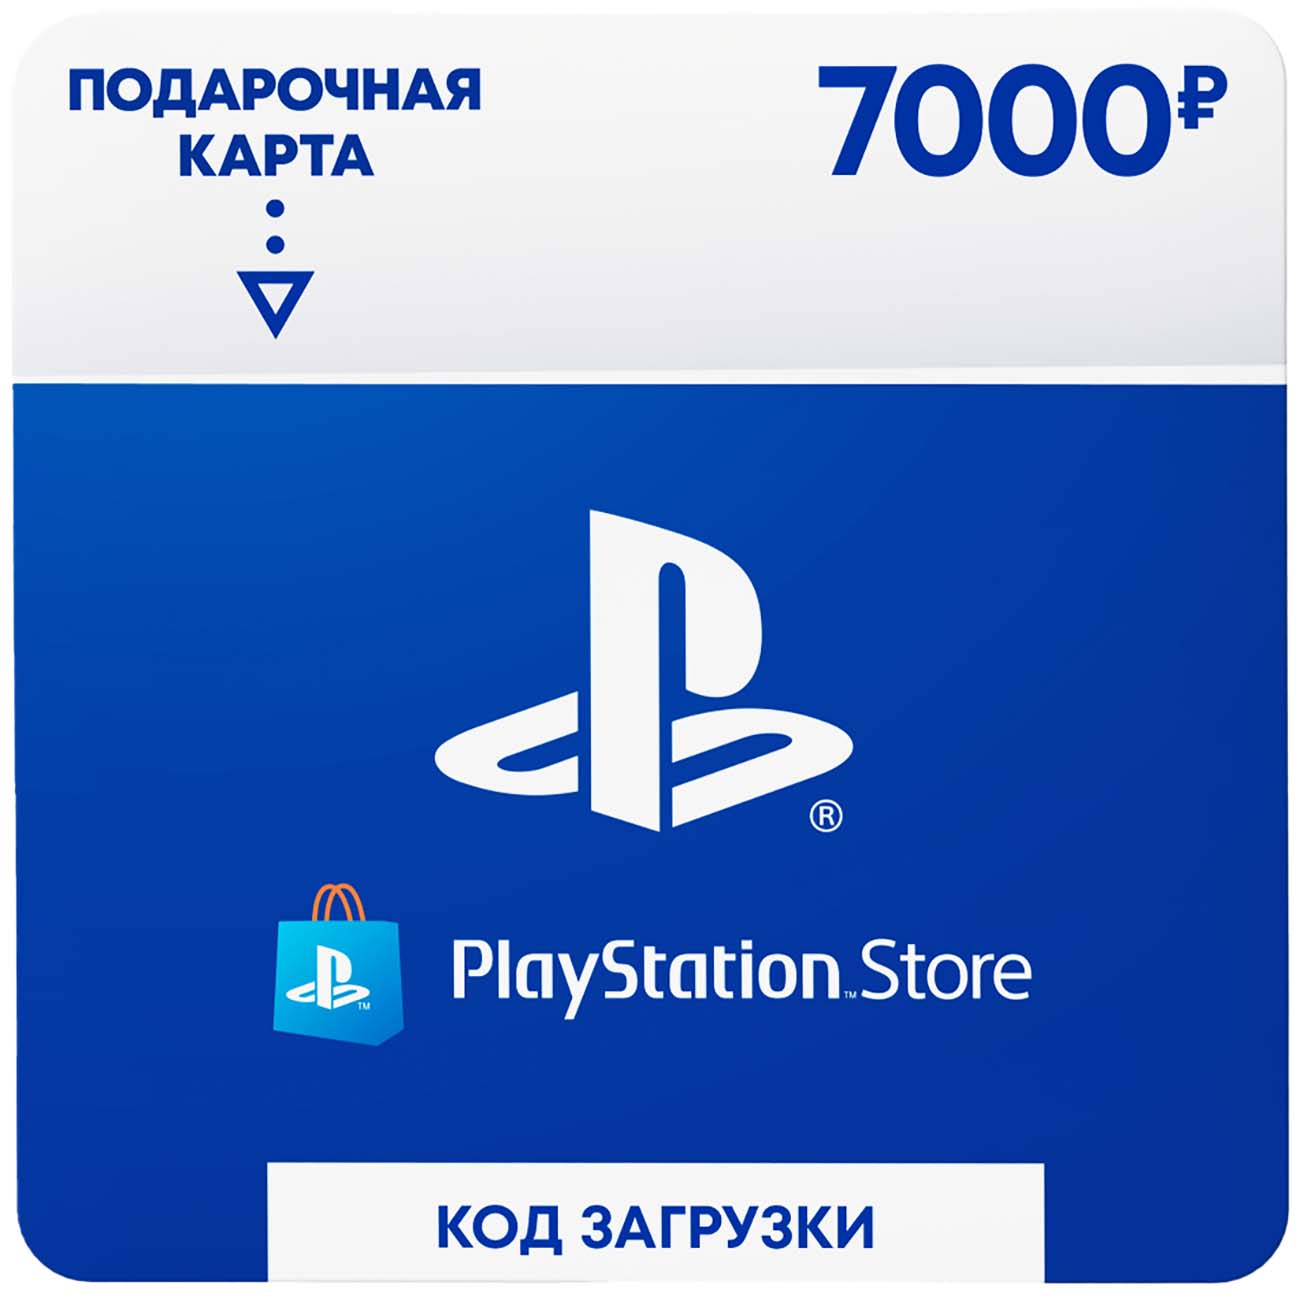 PS Sony PlayStation Store 7000 RUB replenishment